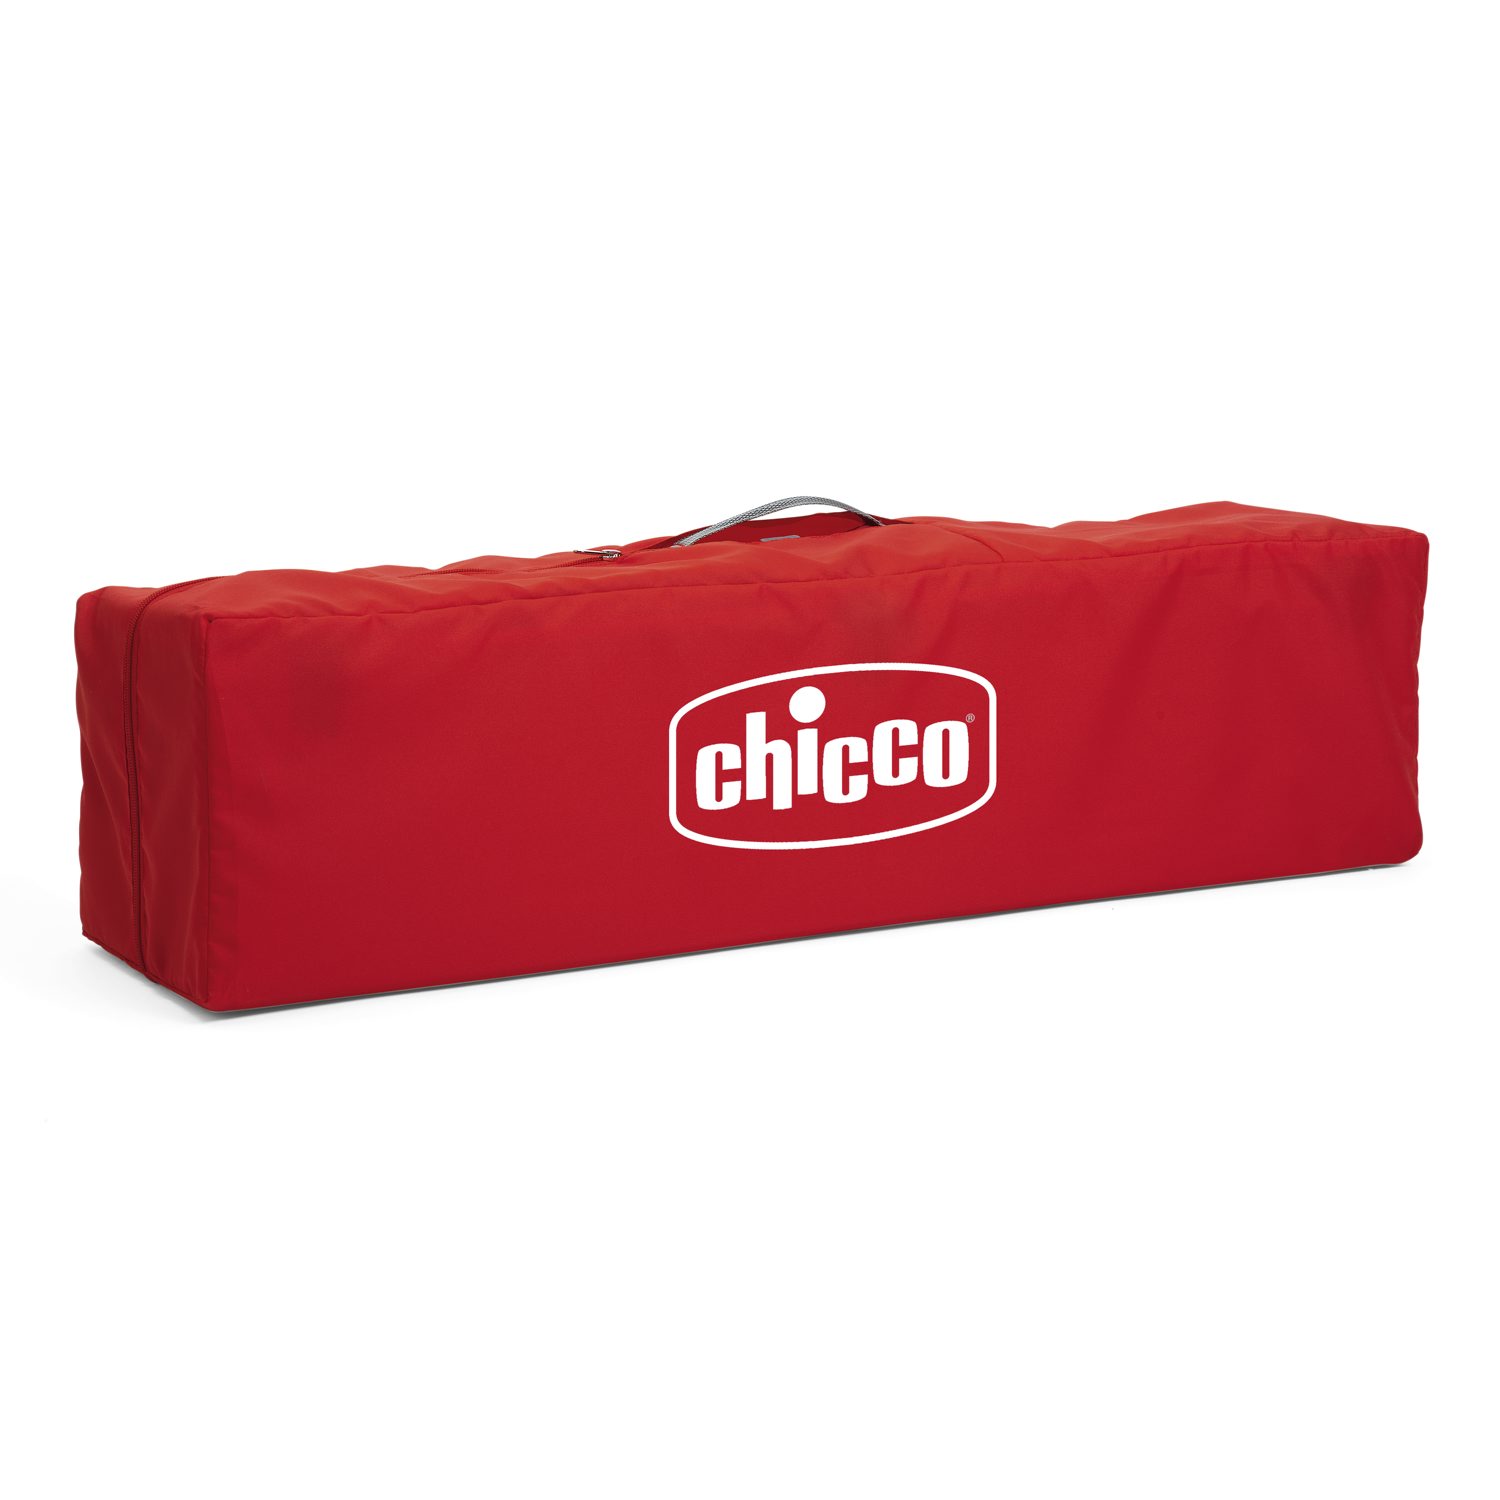 Chicco - open box lion - Chicco